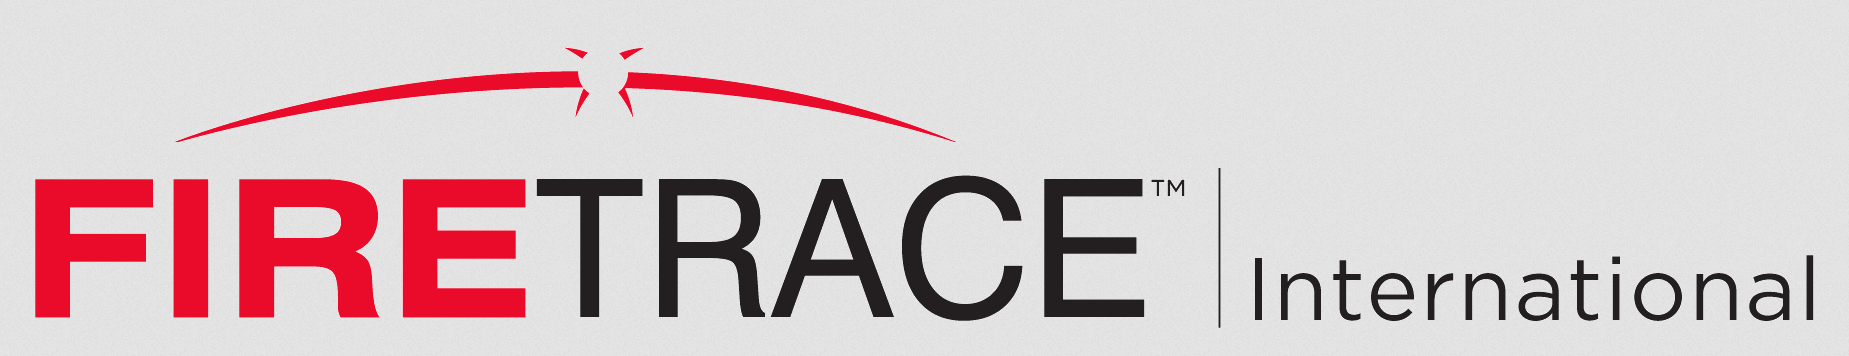 logo firetrace